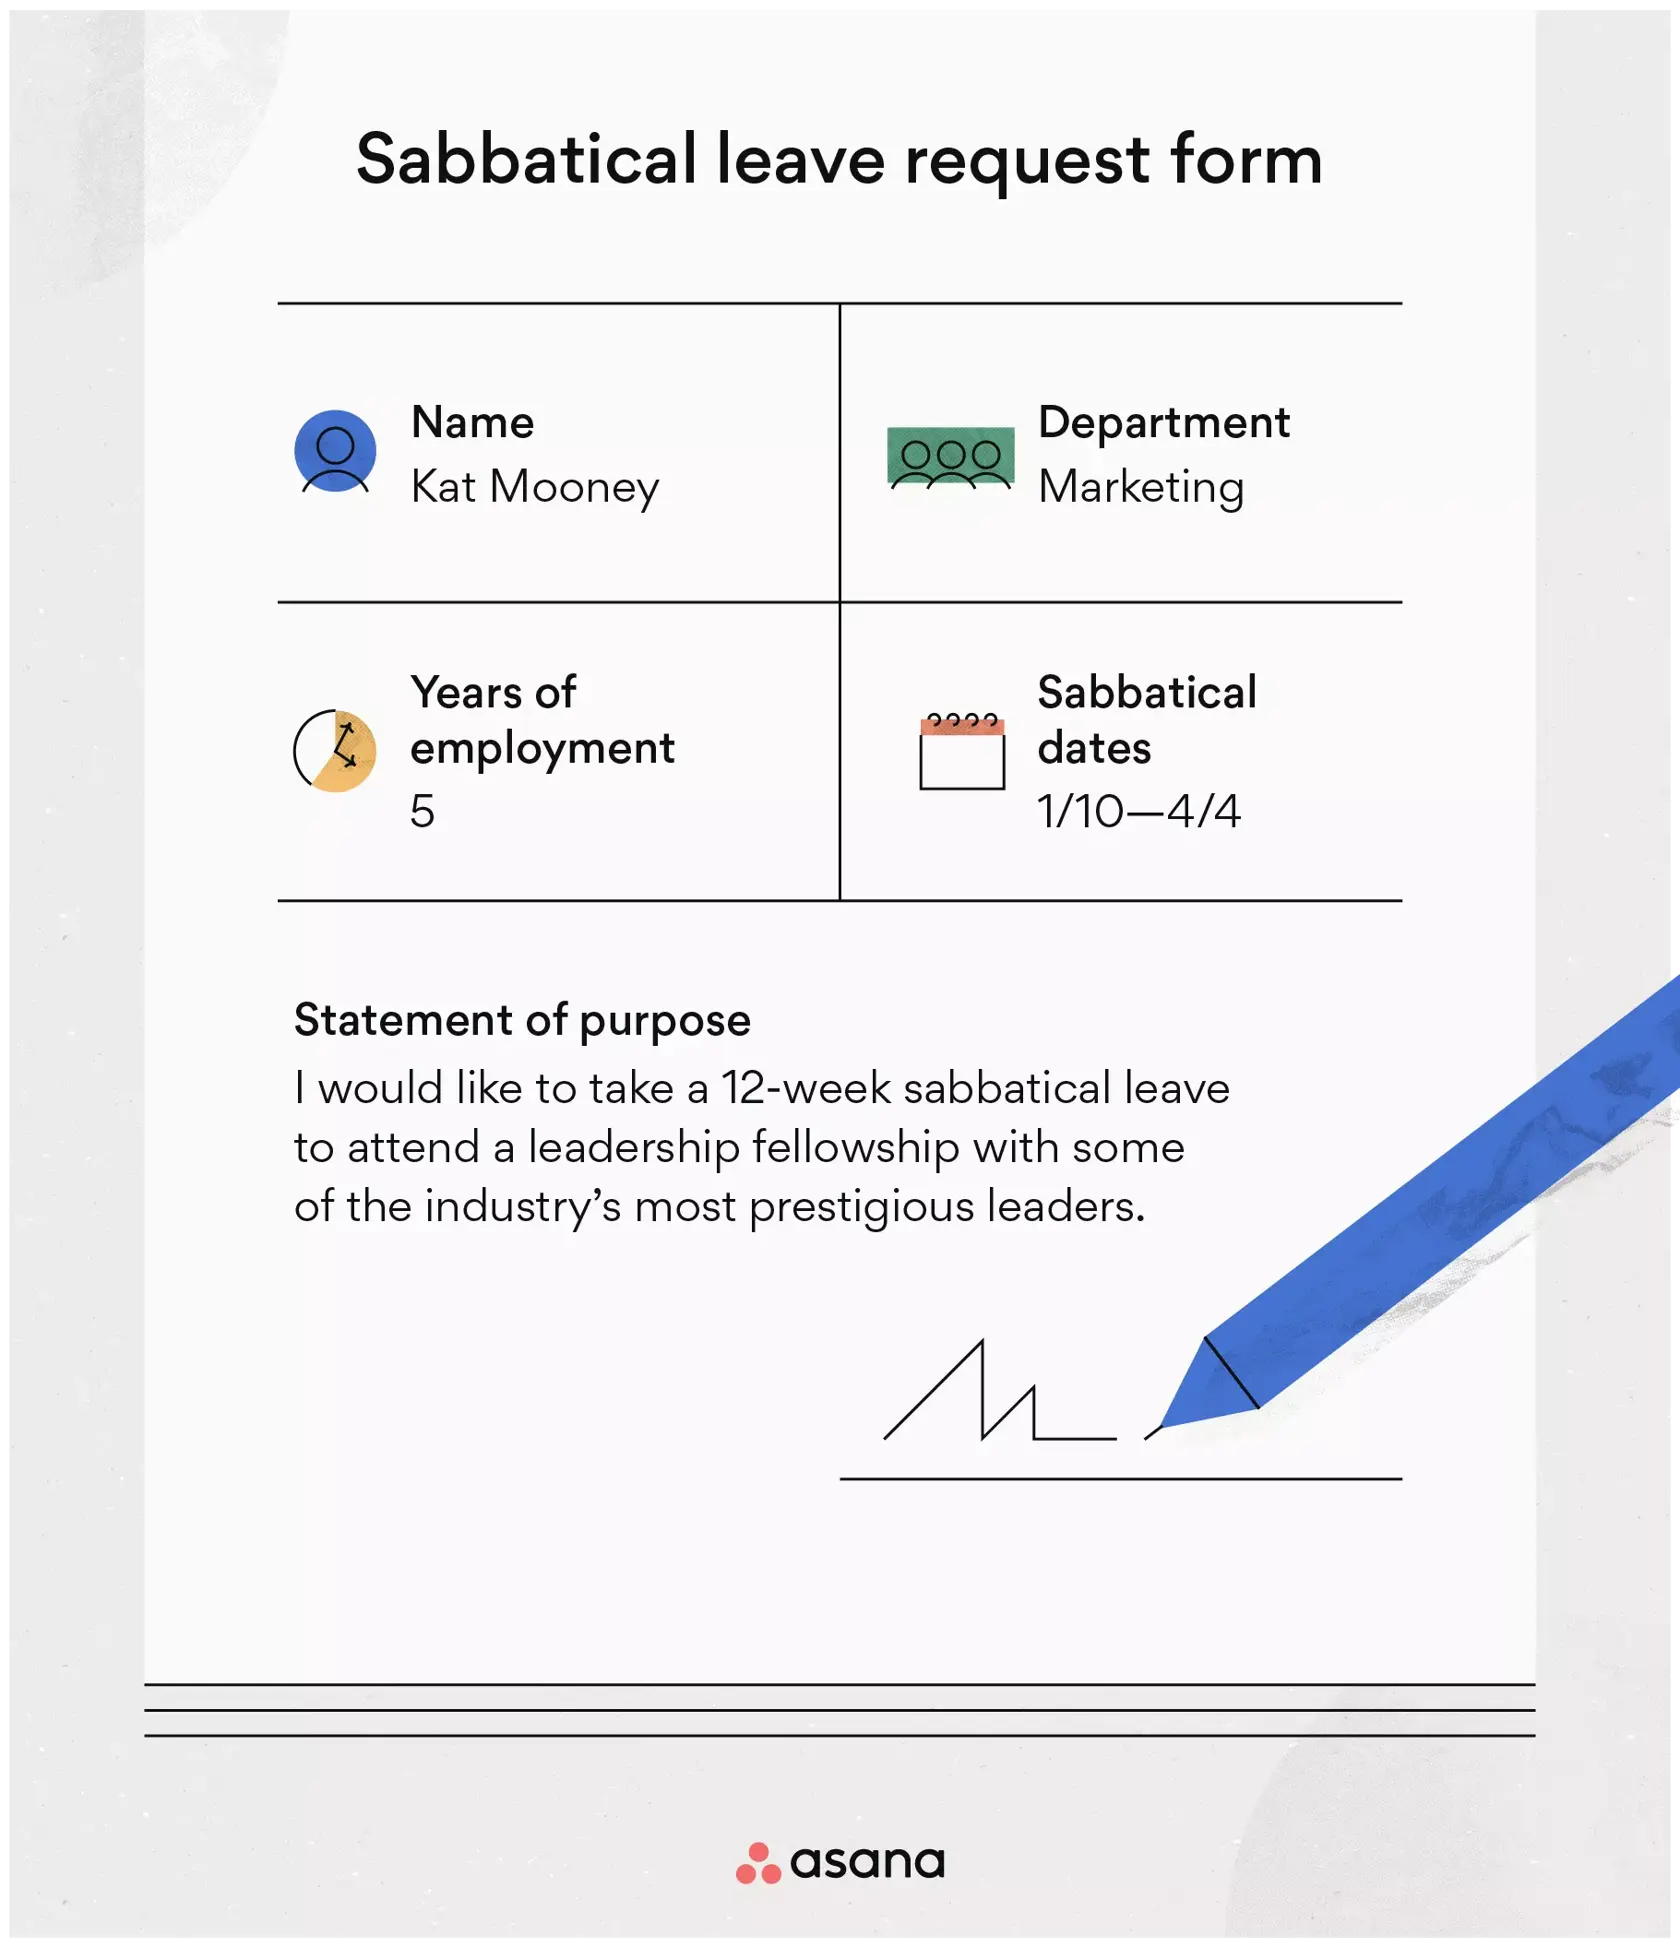 [inline illustration] Sabbatical leave request form (example)